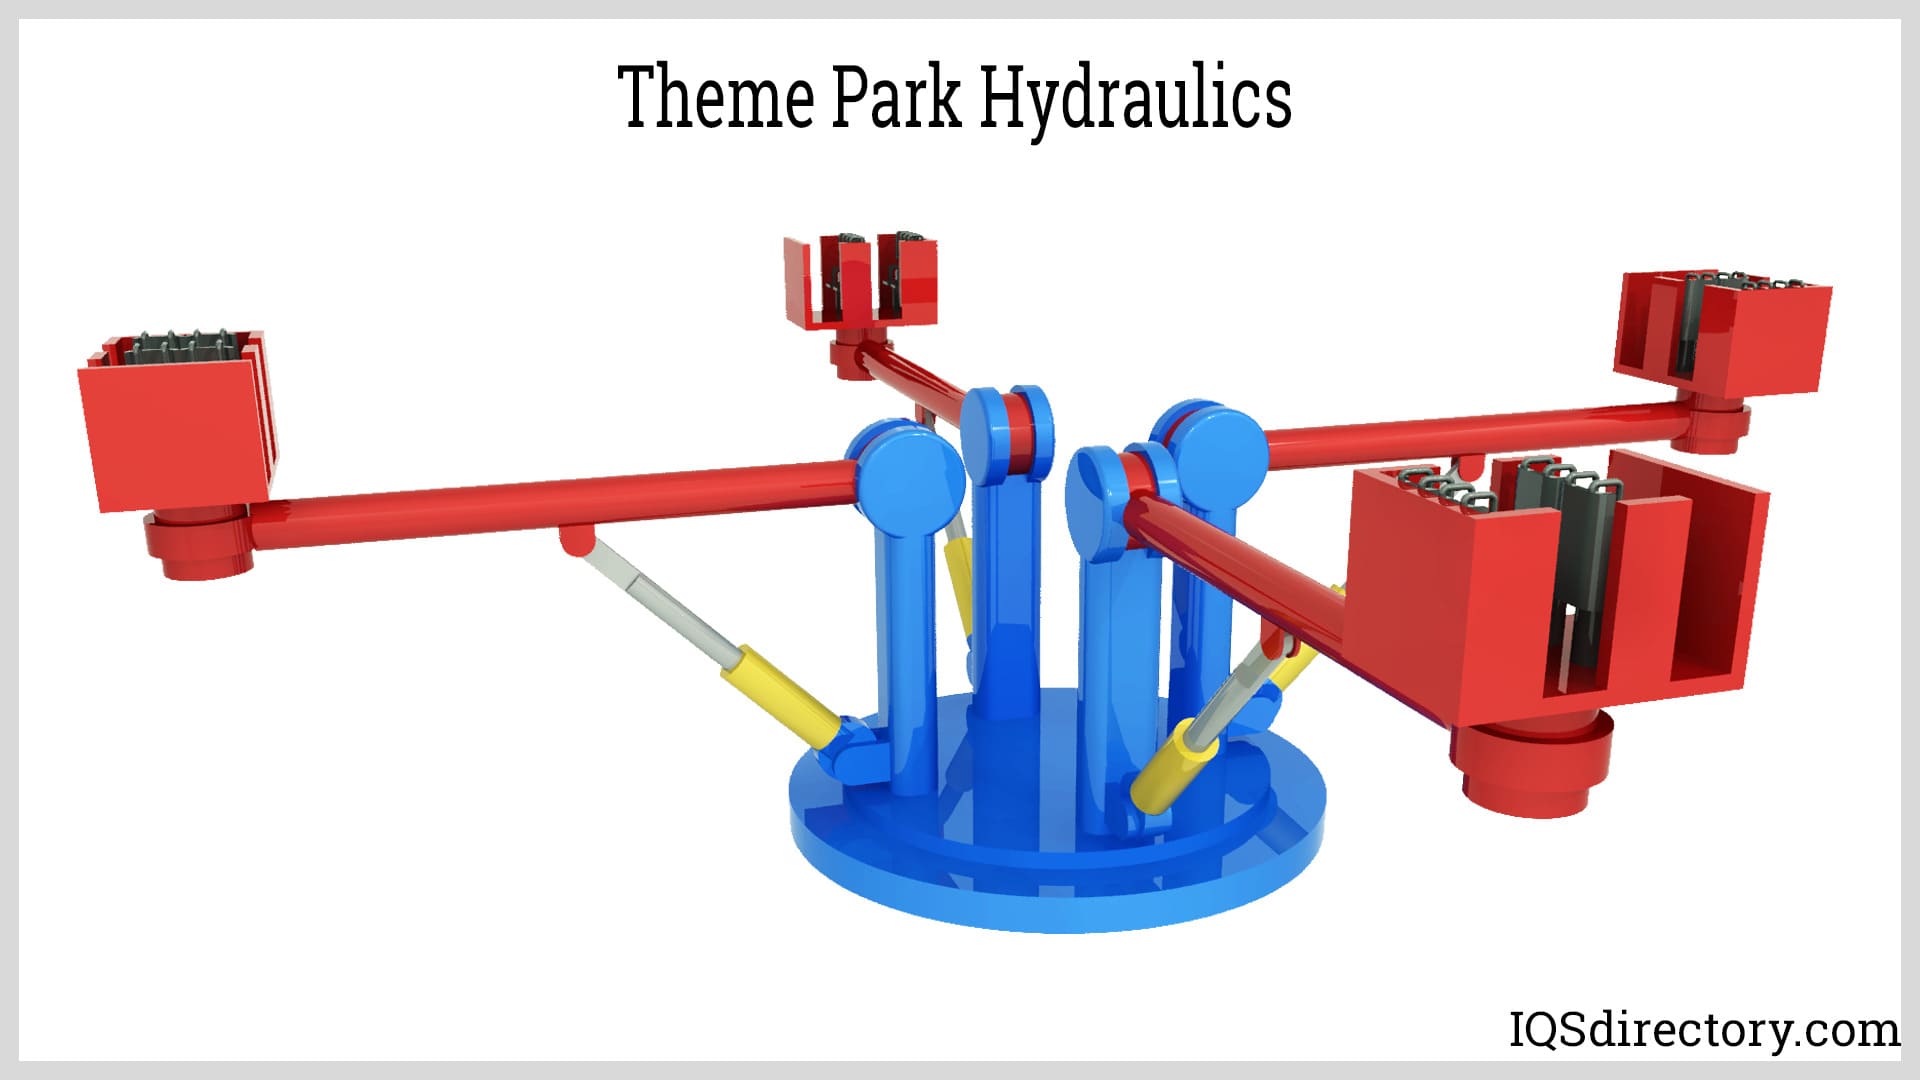 Theme Park Hydraulics